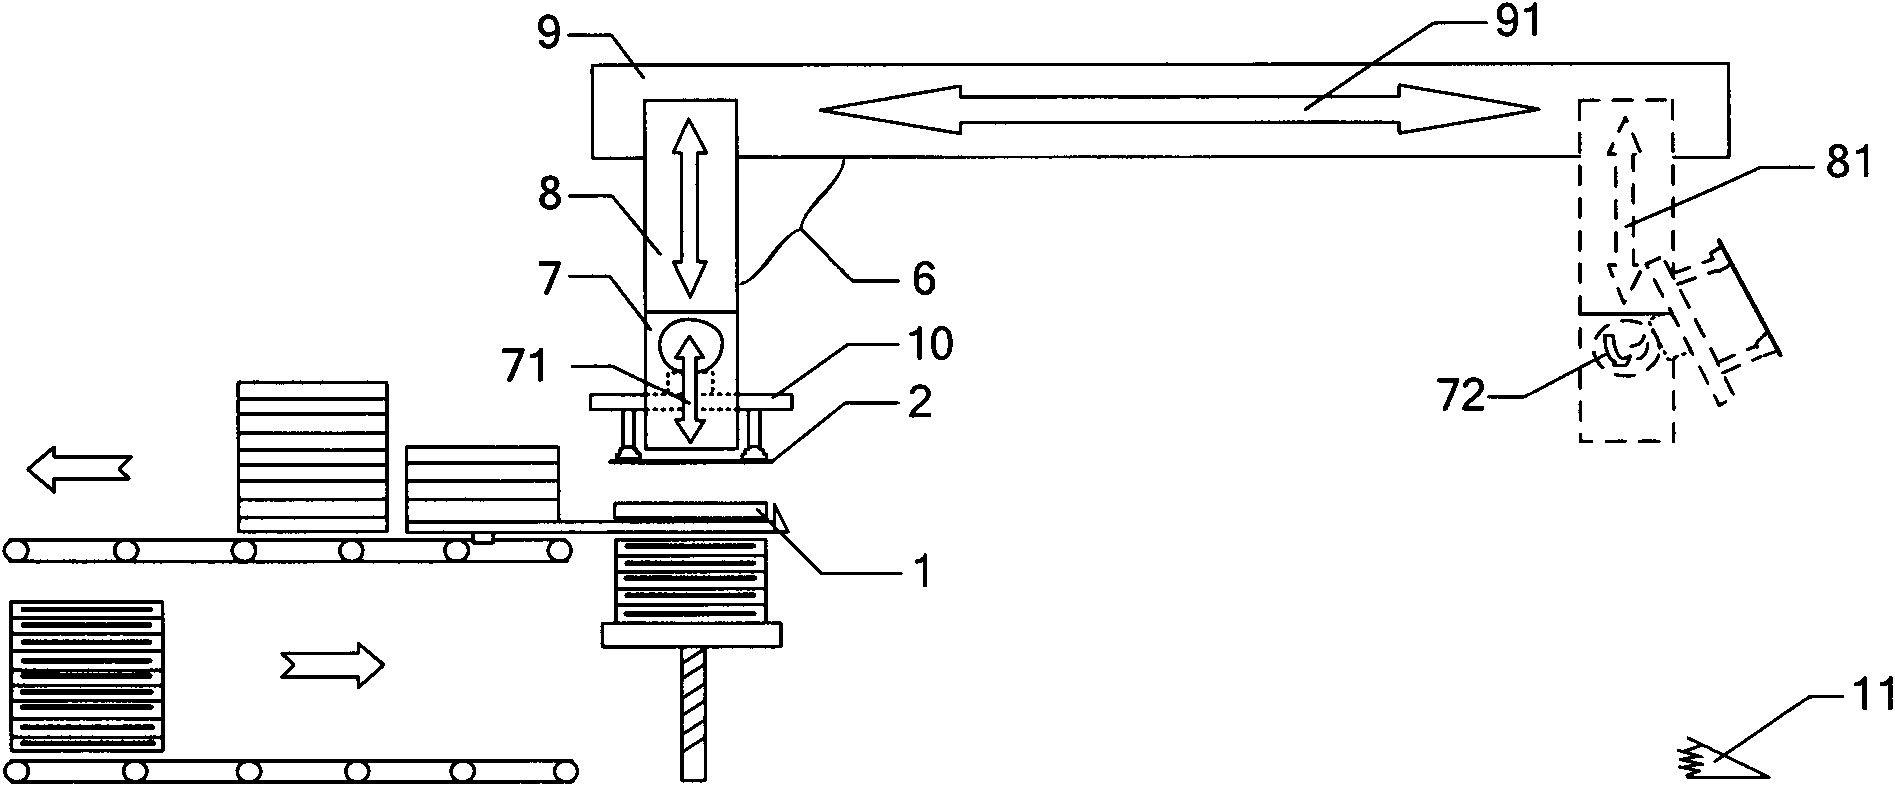 Liquid crystal panel shift apparatus and method